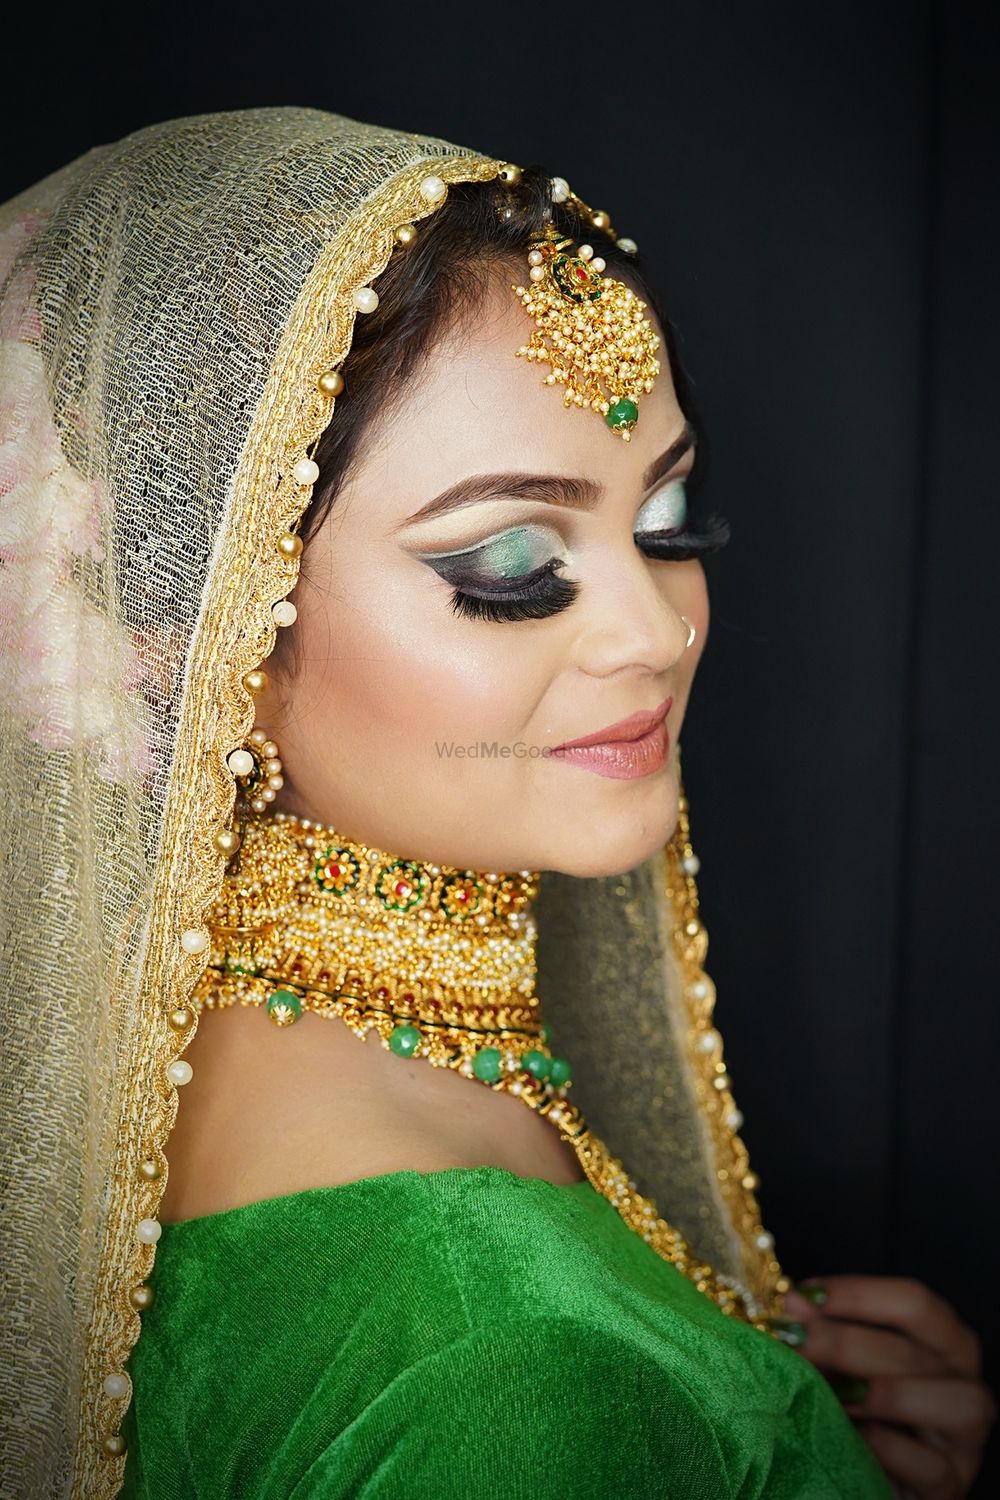 Photo By Aryashree Makeup Studio - Bridal Makeup